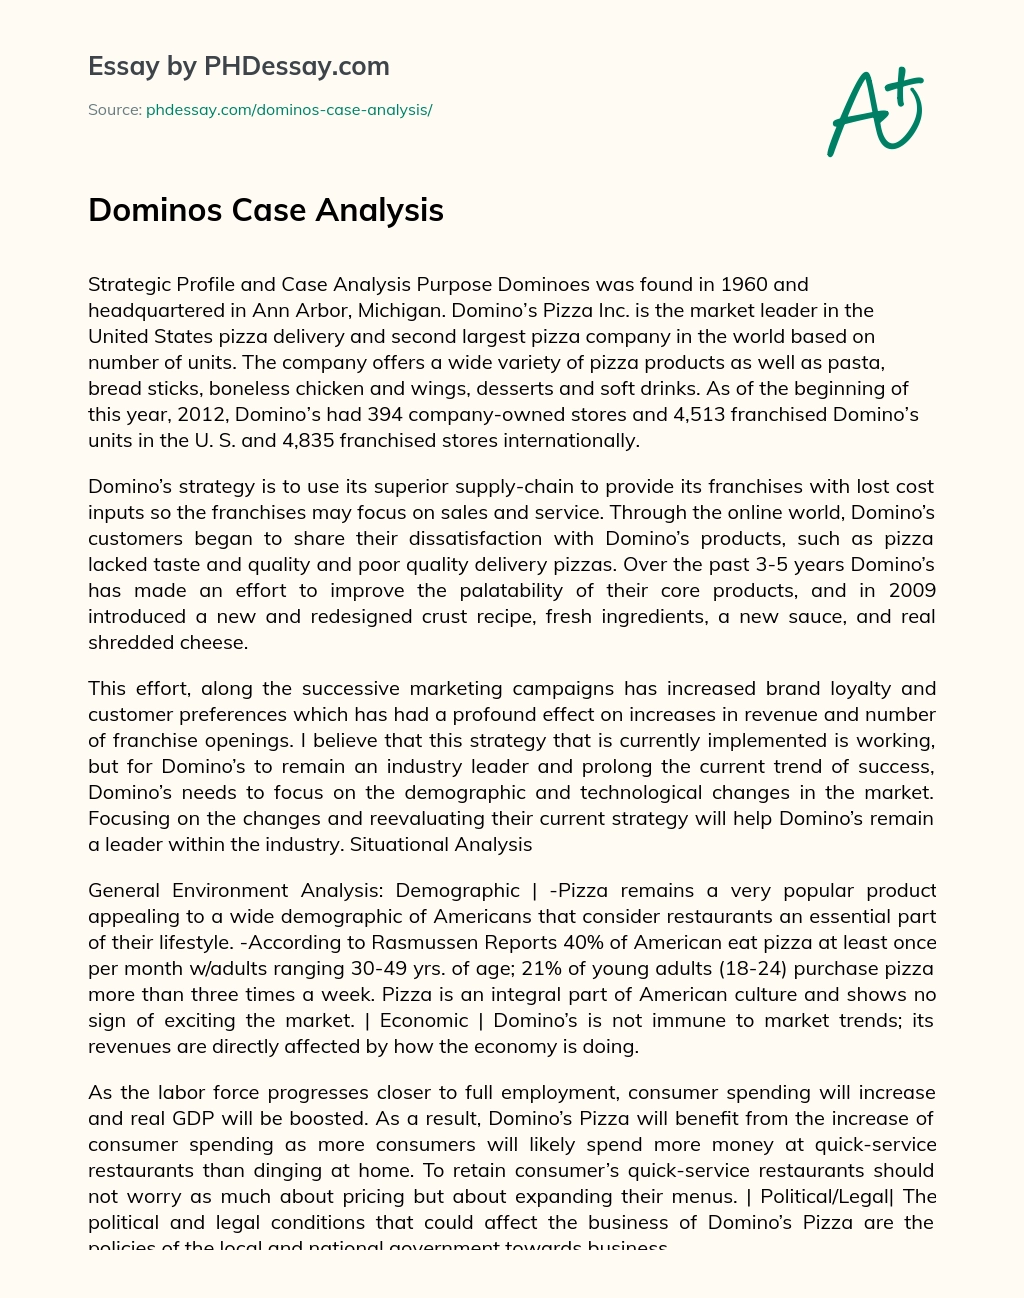 Dominos Case Analysis essay